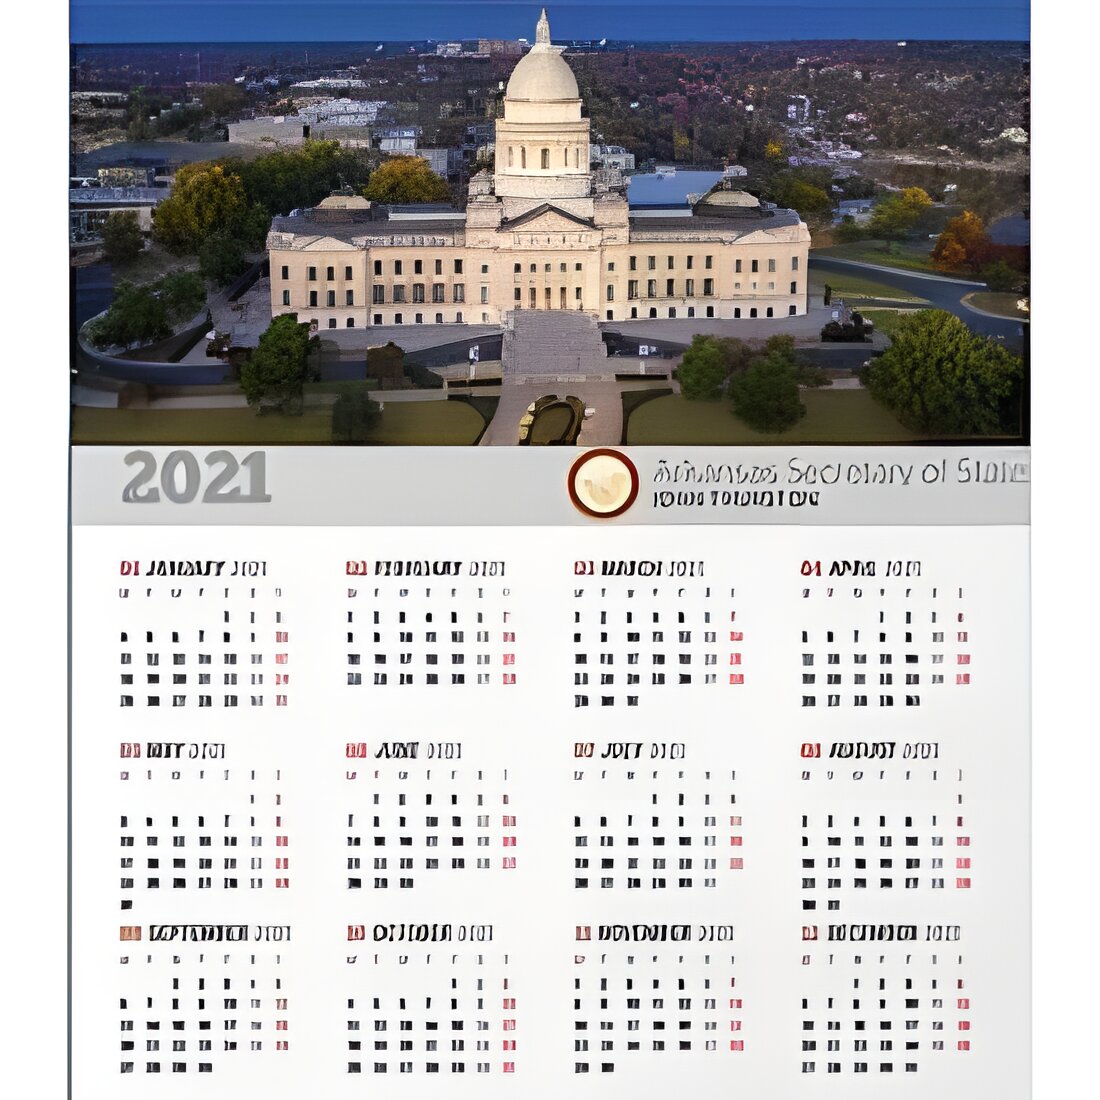 Free 2021 Arkansas Wall Calendar Free Samples by MAIL & Free Stuff